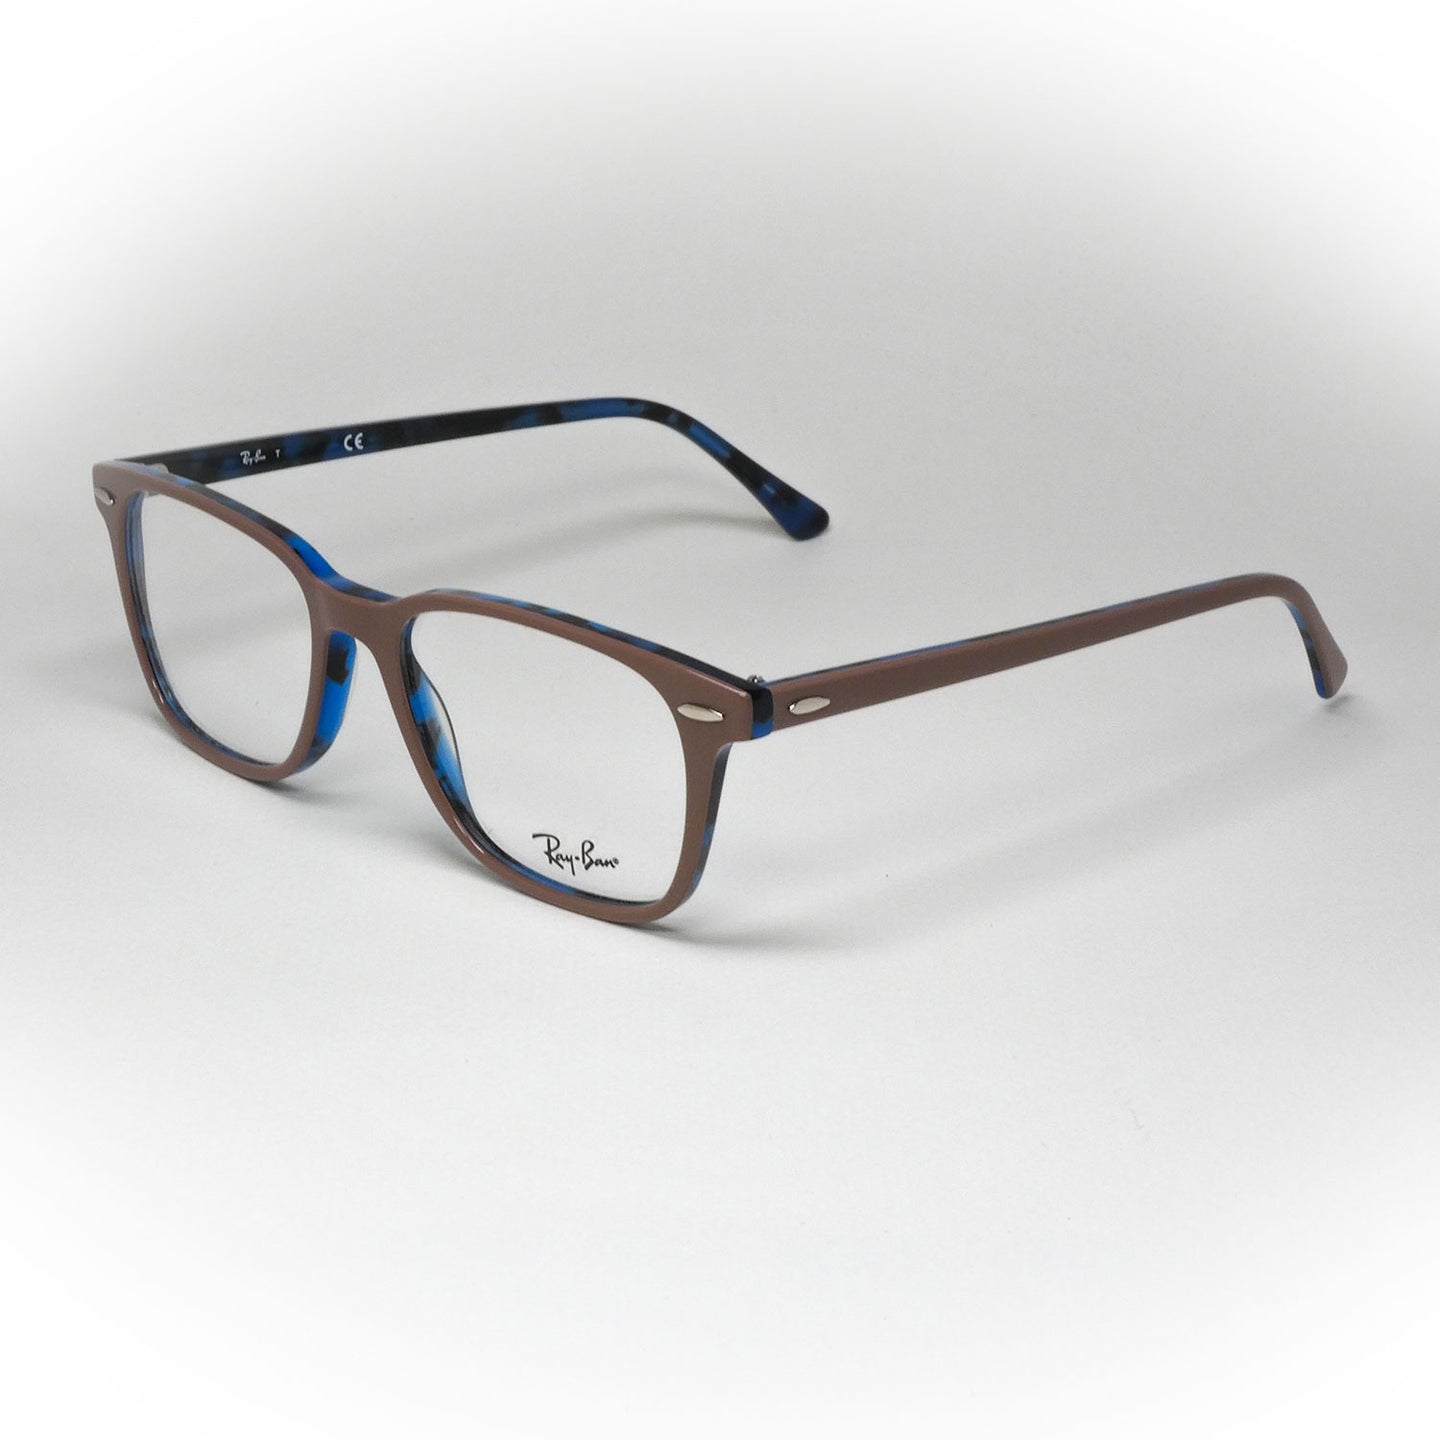 glasses ray ban model 7119 color 5715 beige